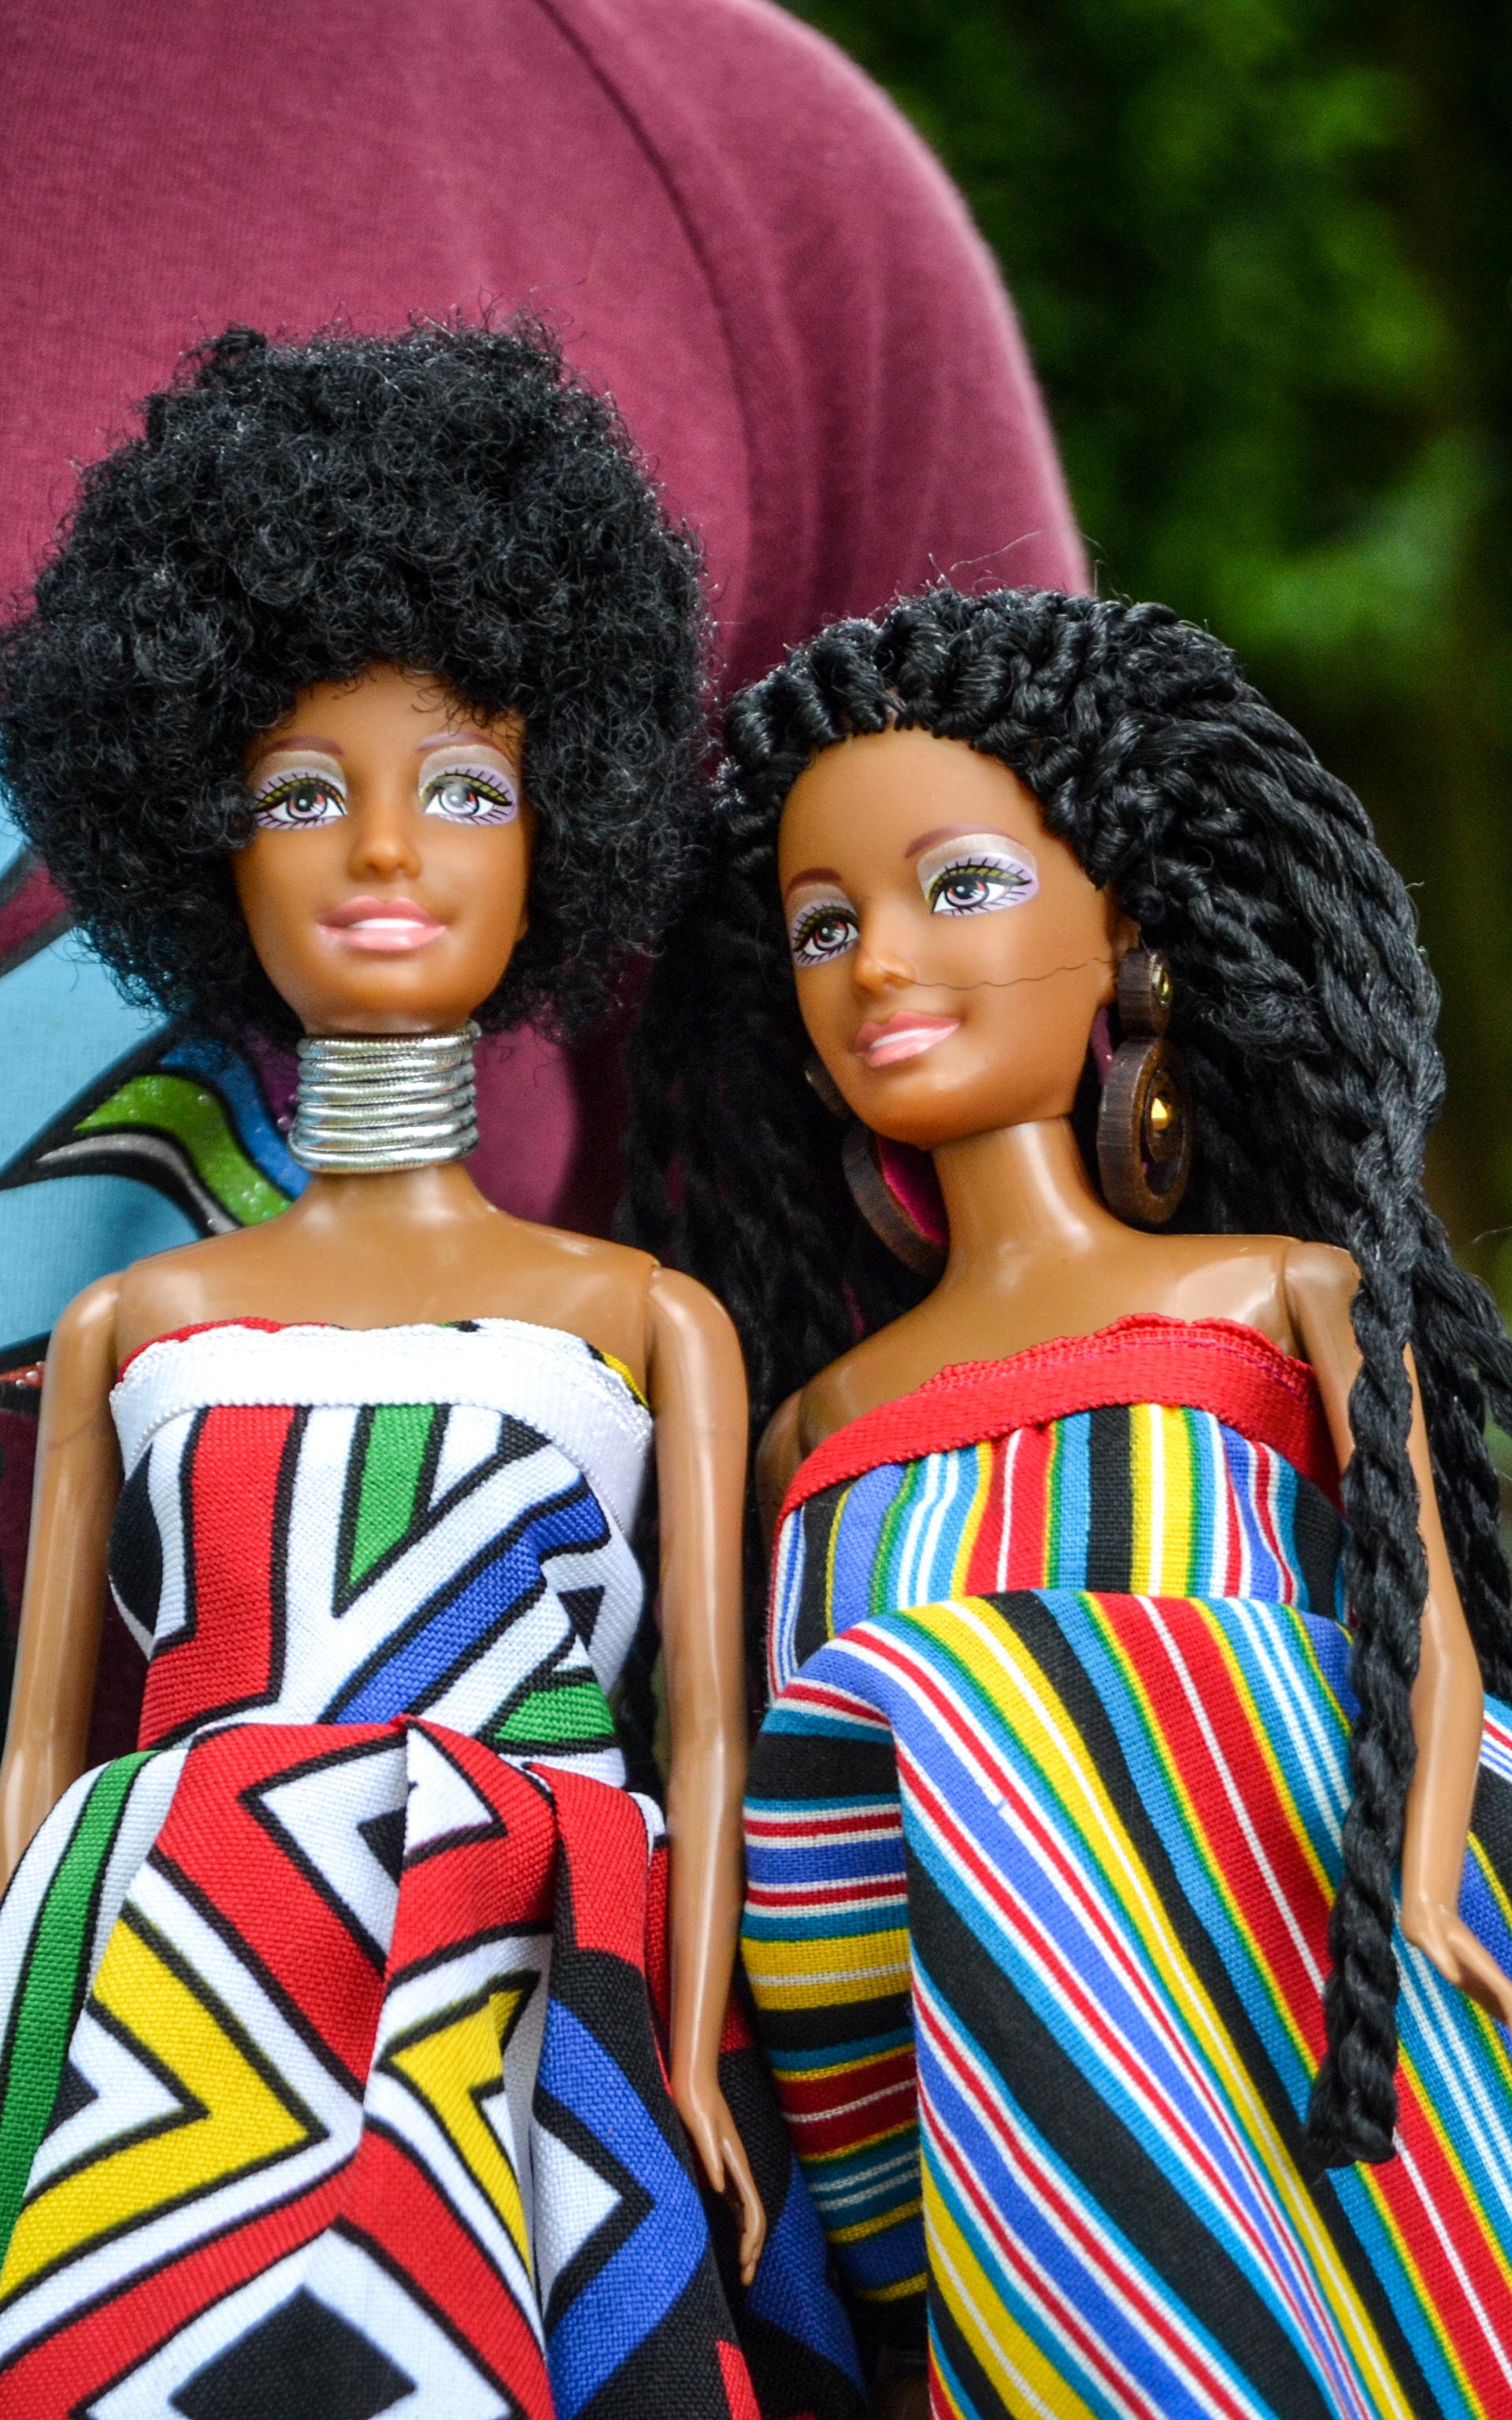 Beautiful News-Child displaying two dolls